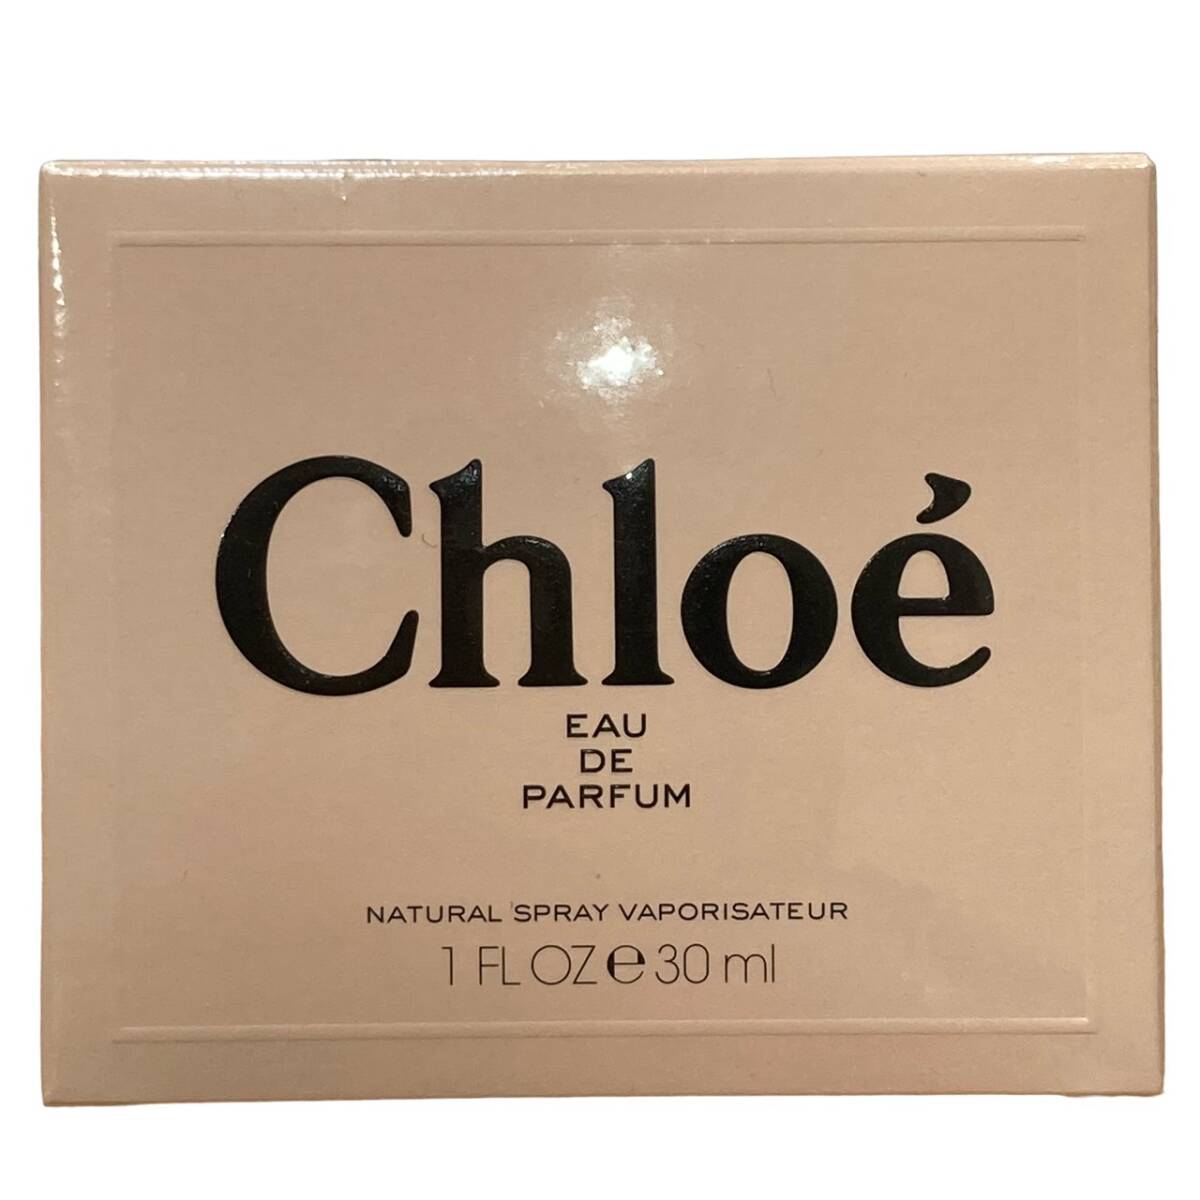  new goods Chloe Chloe rose tongue je Lynn /o-do Pal fam natural spray va poly- The ta-3 point set perfume cosme 